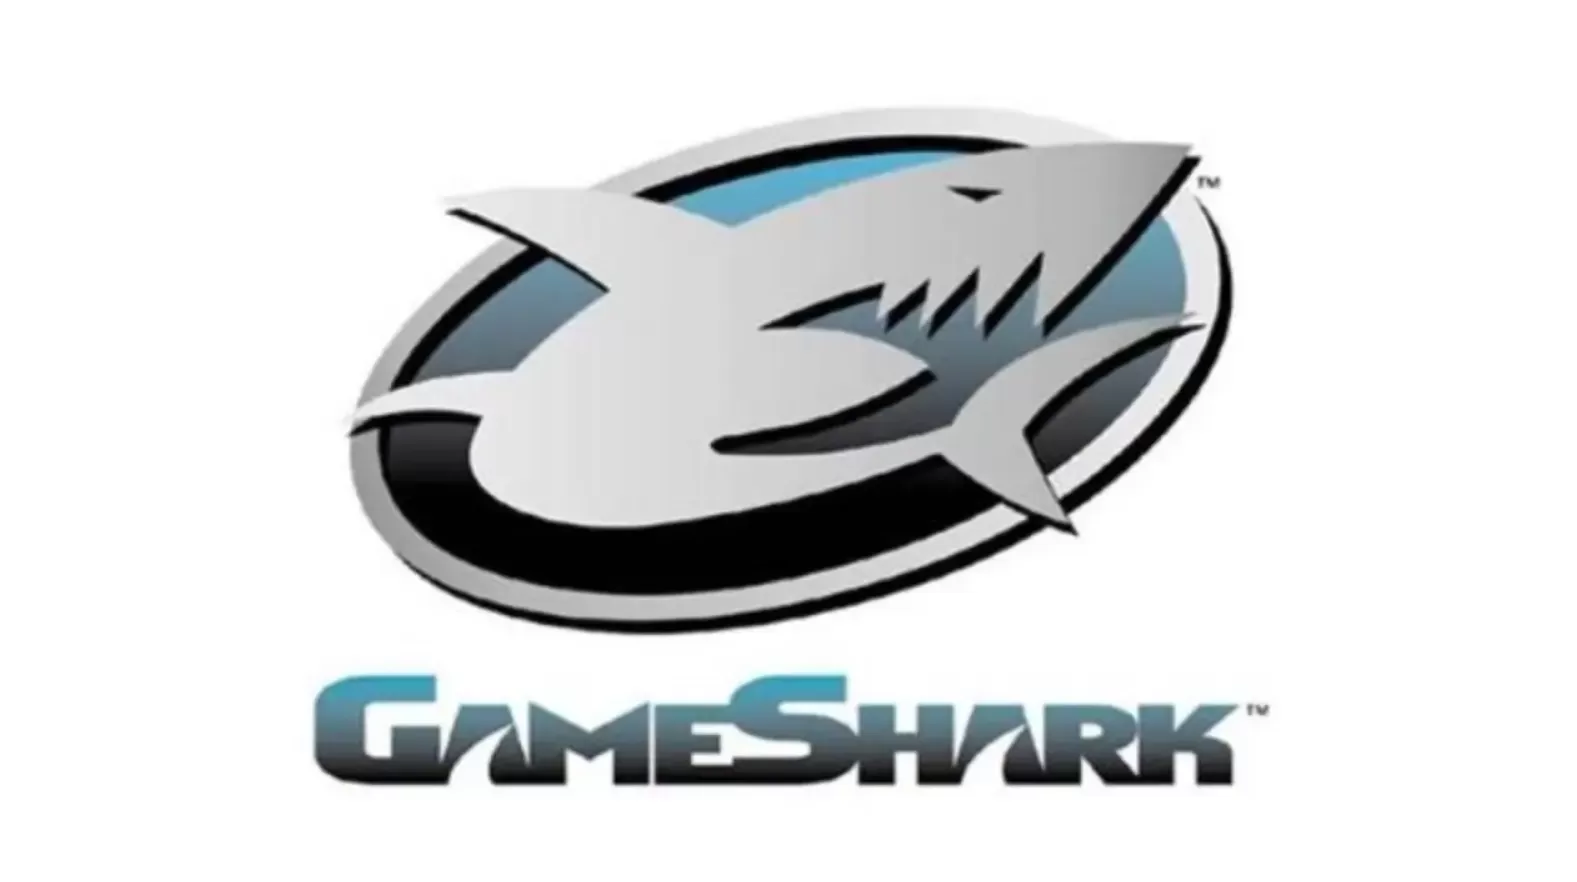 Ai Shark GameShark_1a